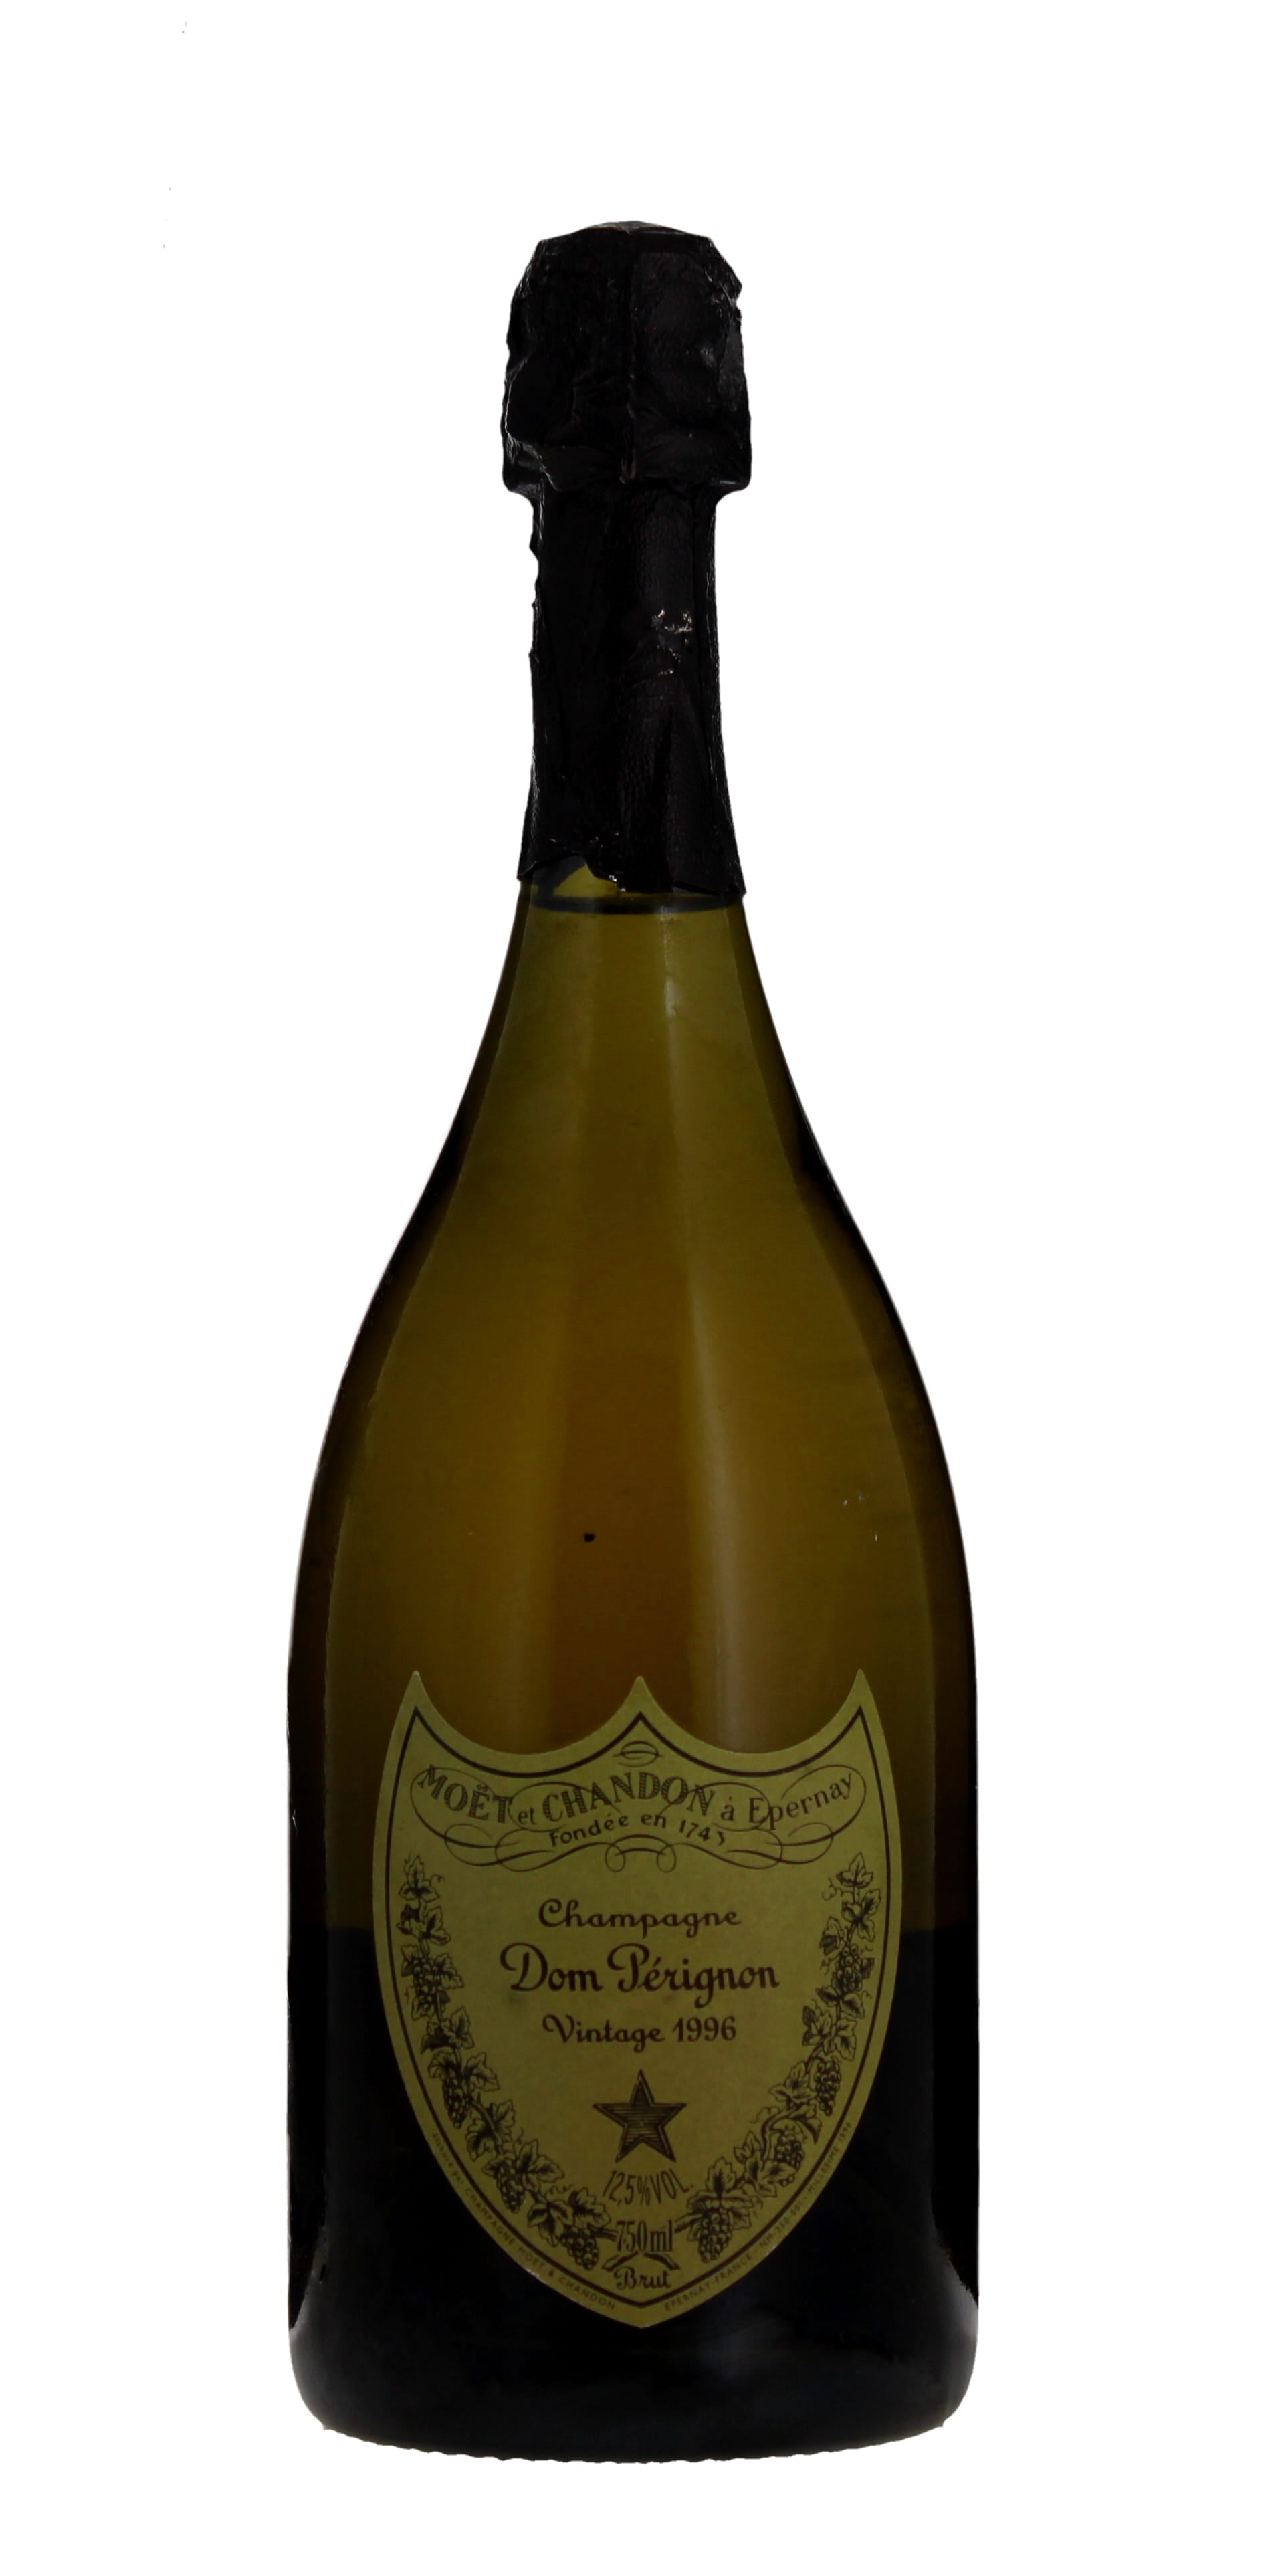 Krug - Brut Champagne Vintage 2002 - Varmax Liquor Pantry